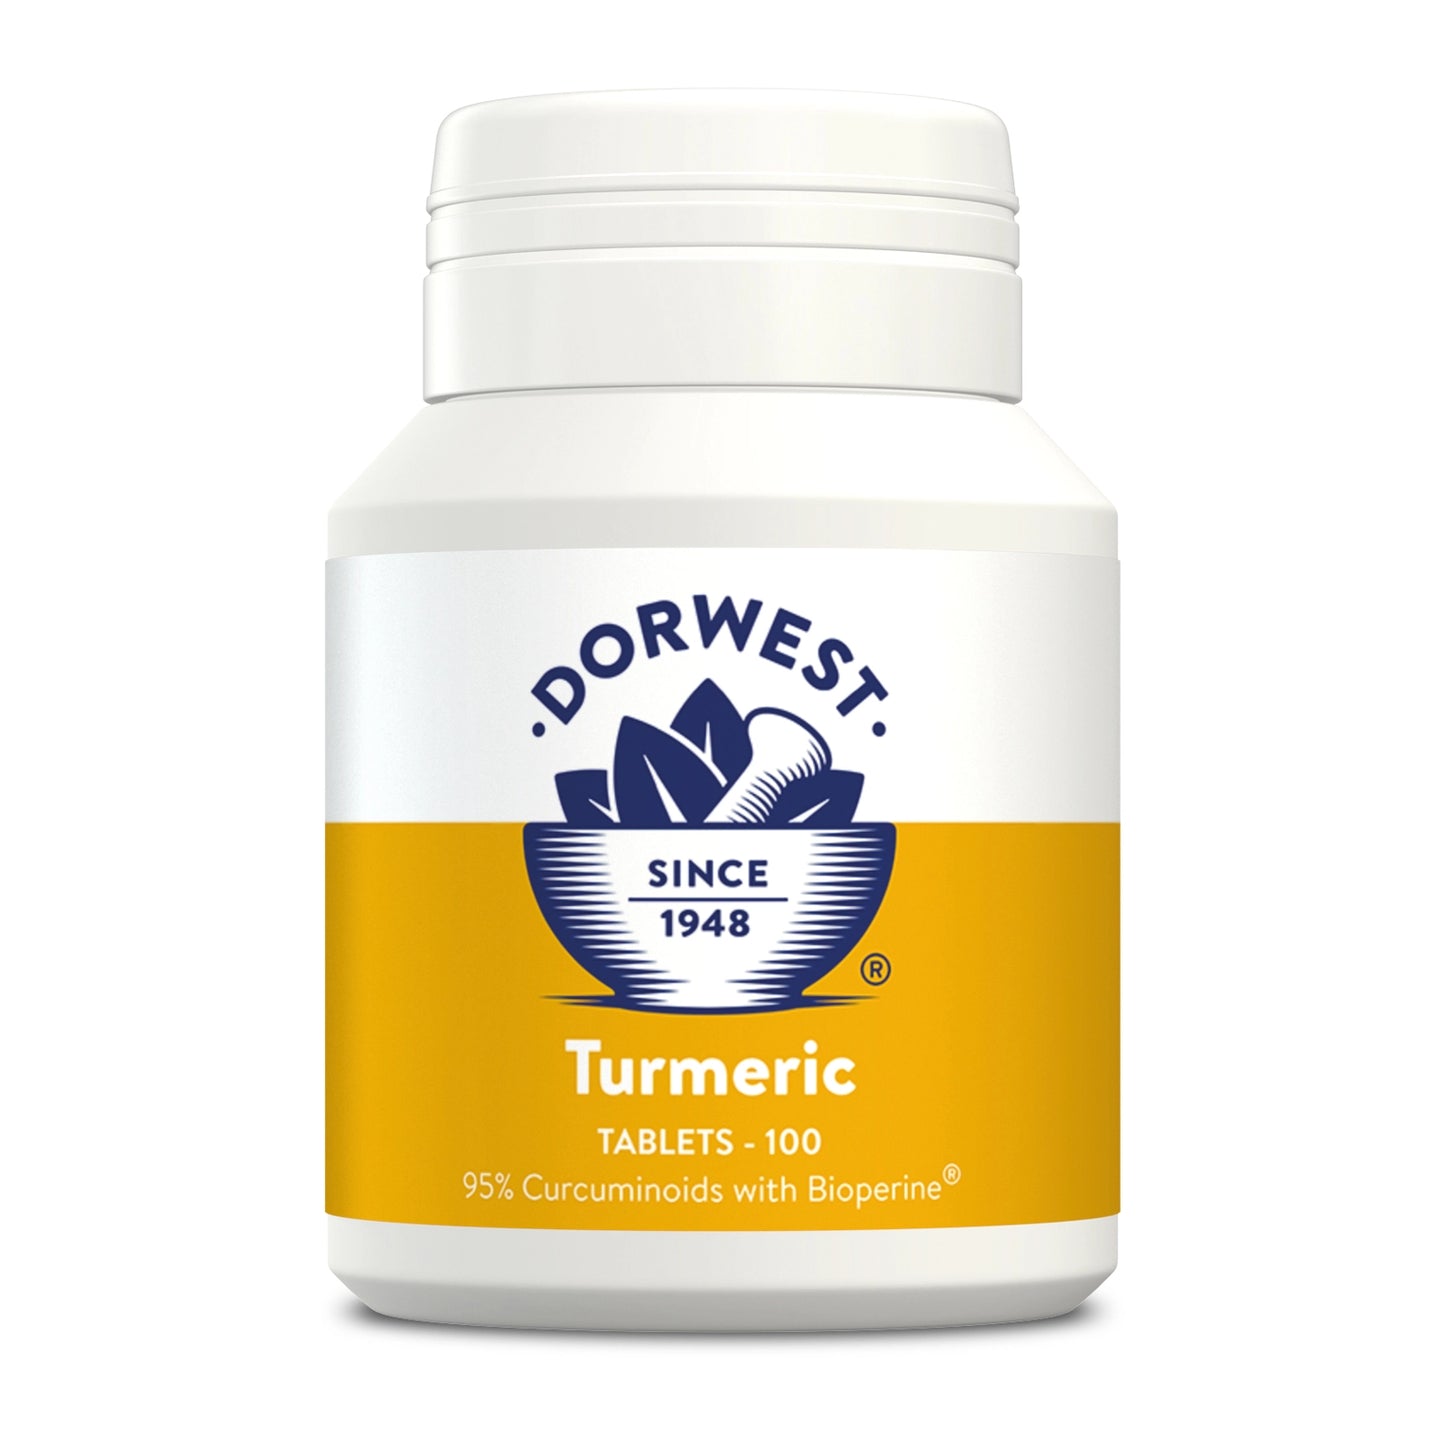 Dorwest Turmeric Tablets - 100 tablets